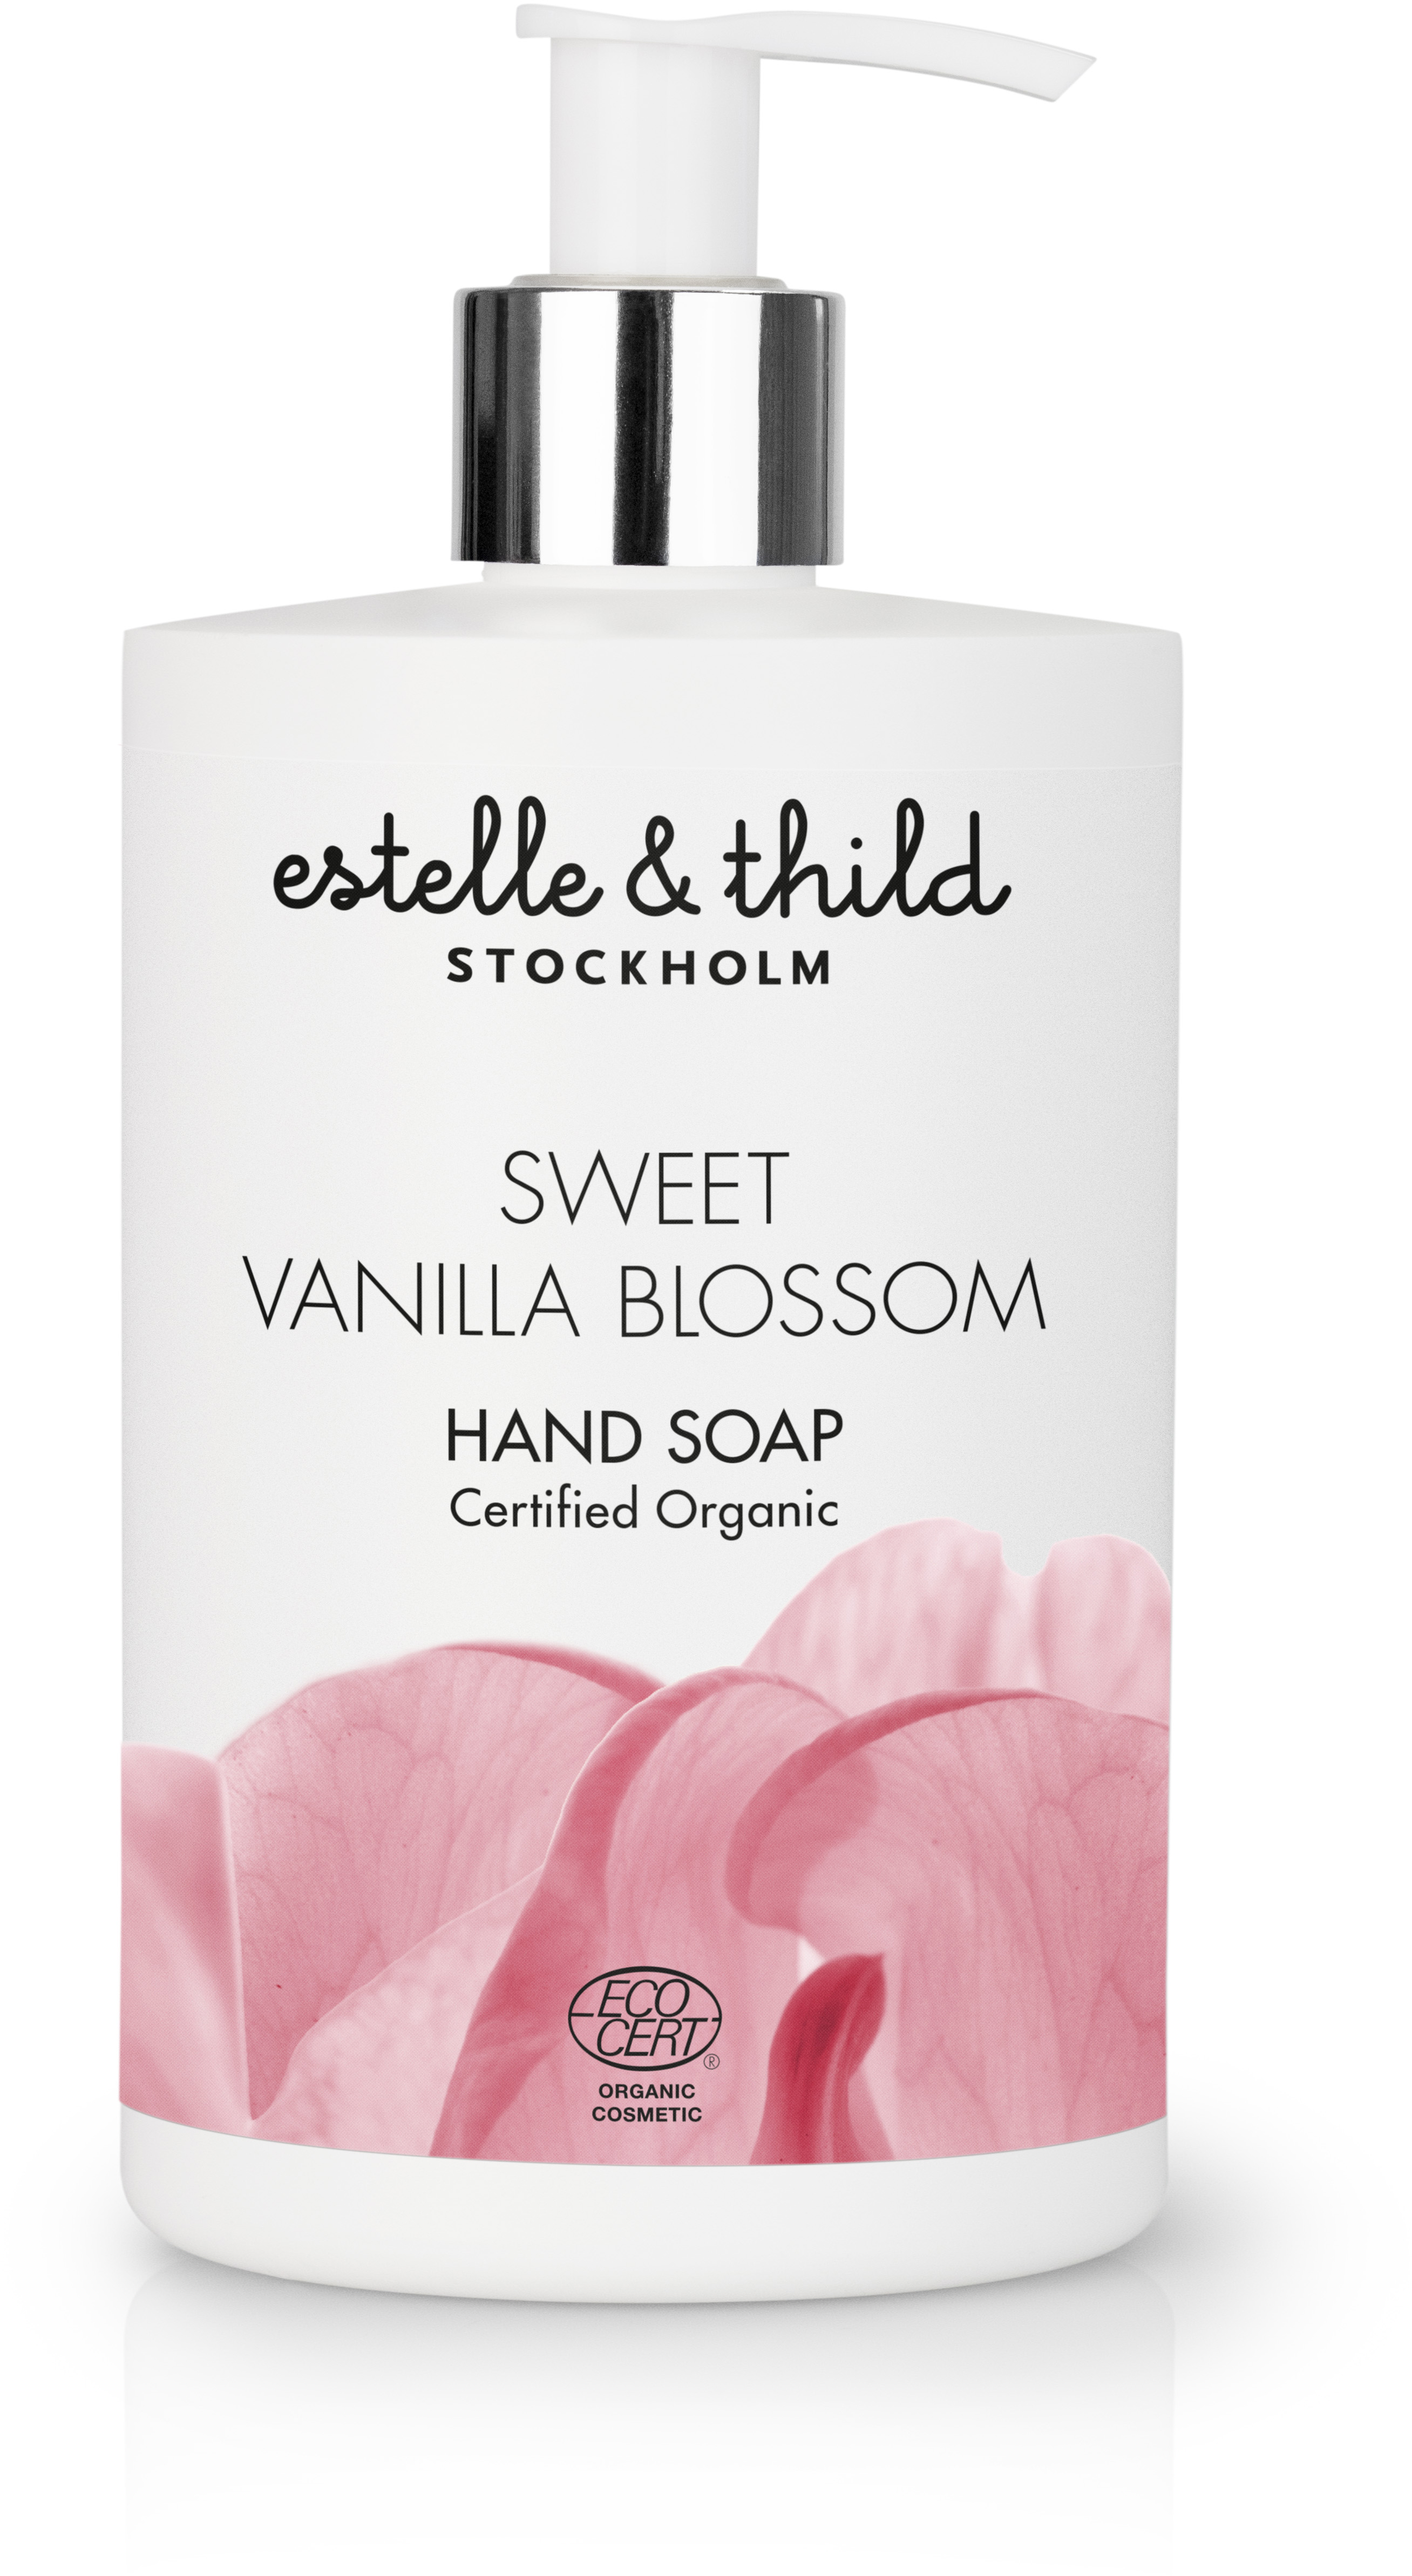 Estelle & Thild Sweet Vanilla Blossom Hand Soap